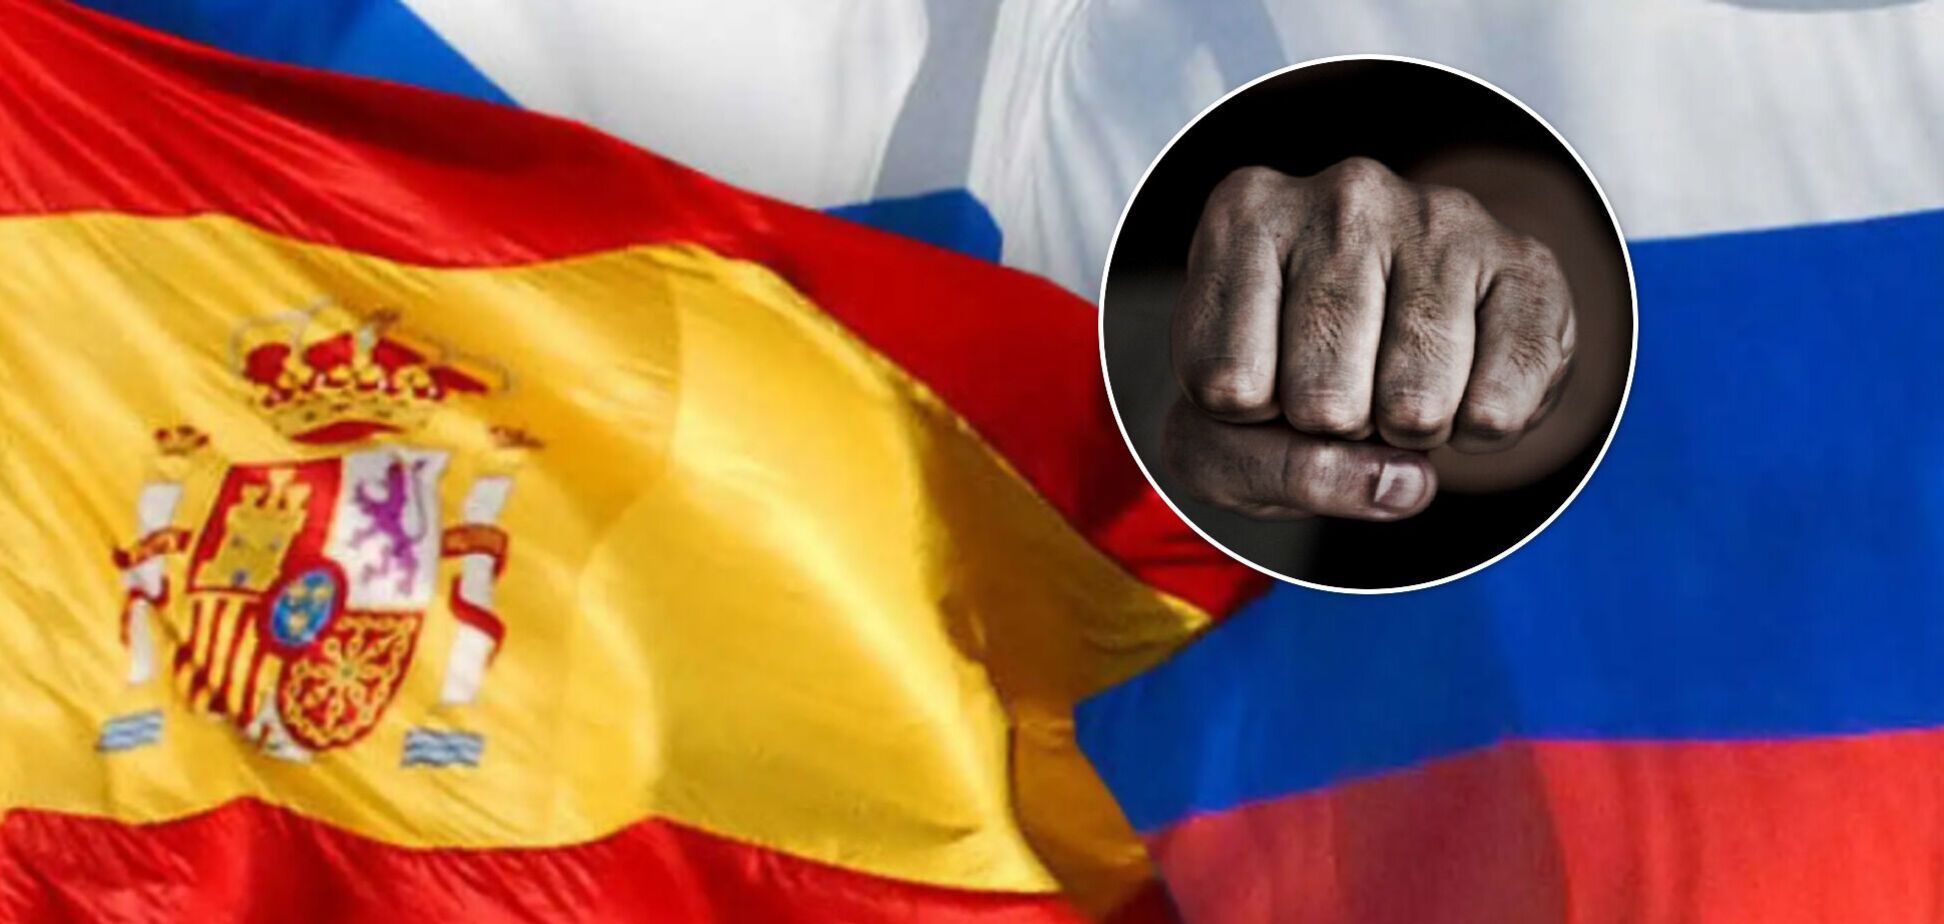 Повалили на пол и били ногами: в Испании россияне напали на украинца-бармена за слова 'Слава Украине'. Видео